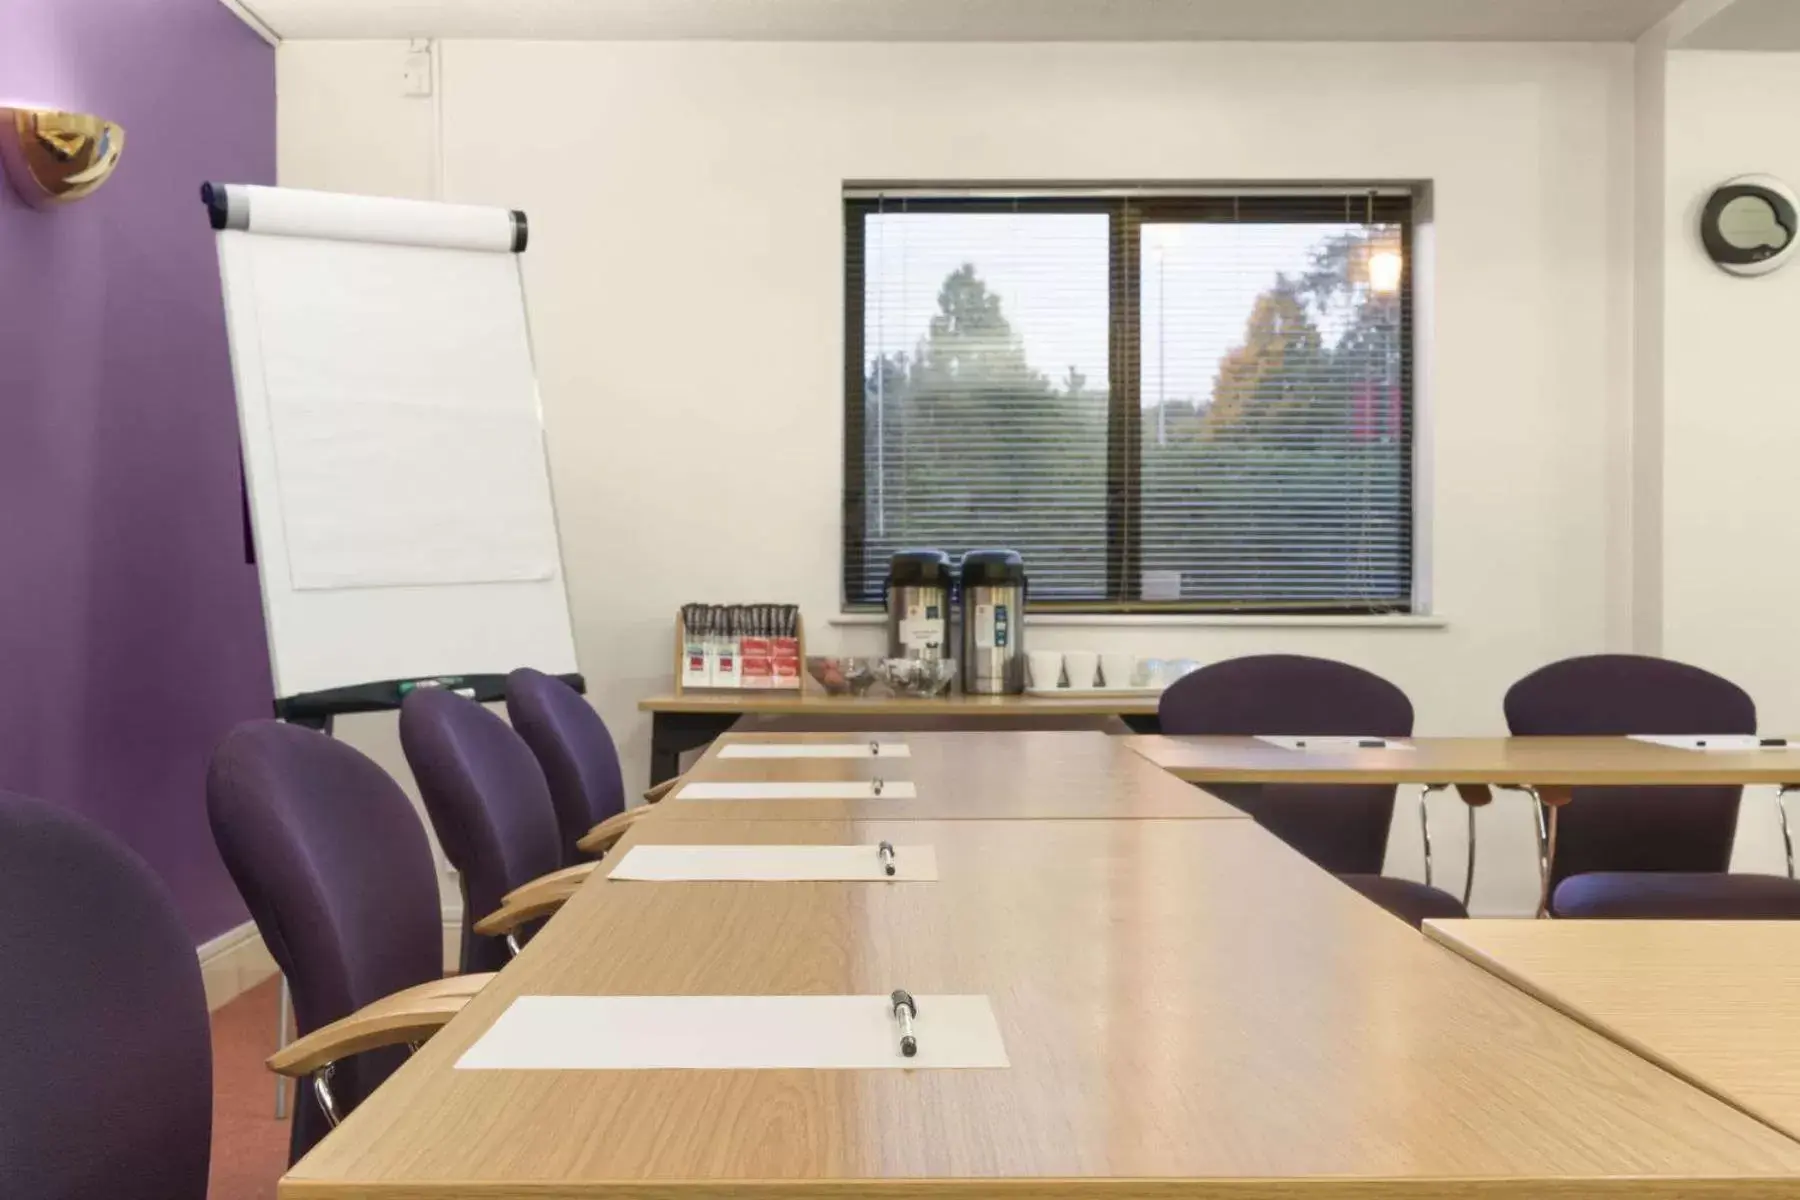 Meeting/conference room in Days Inn Chesterfield - Tibshelf